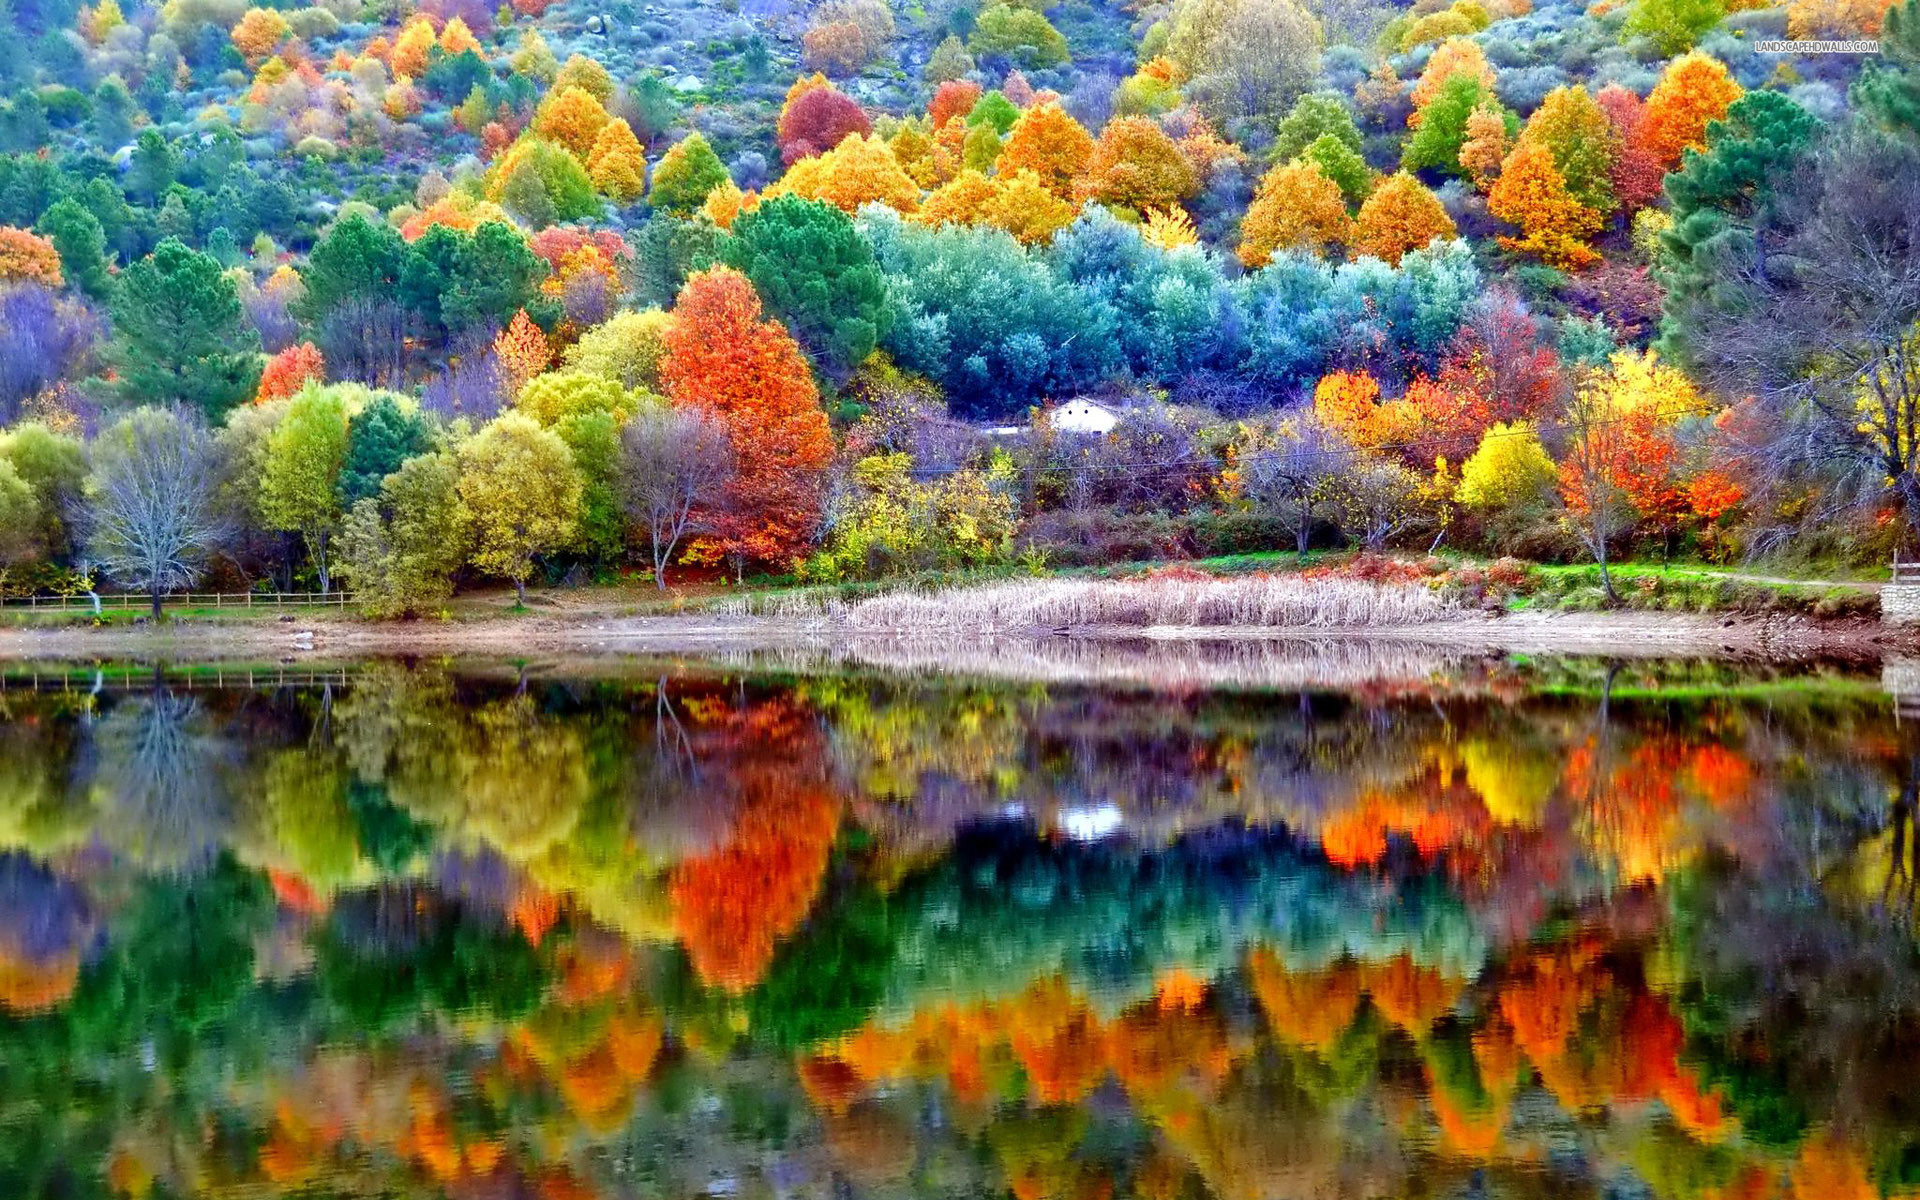 Beautiful Fall Scenery Wallpaper (49+ images)